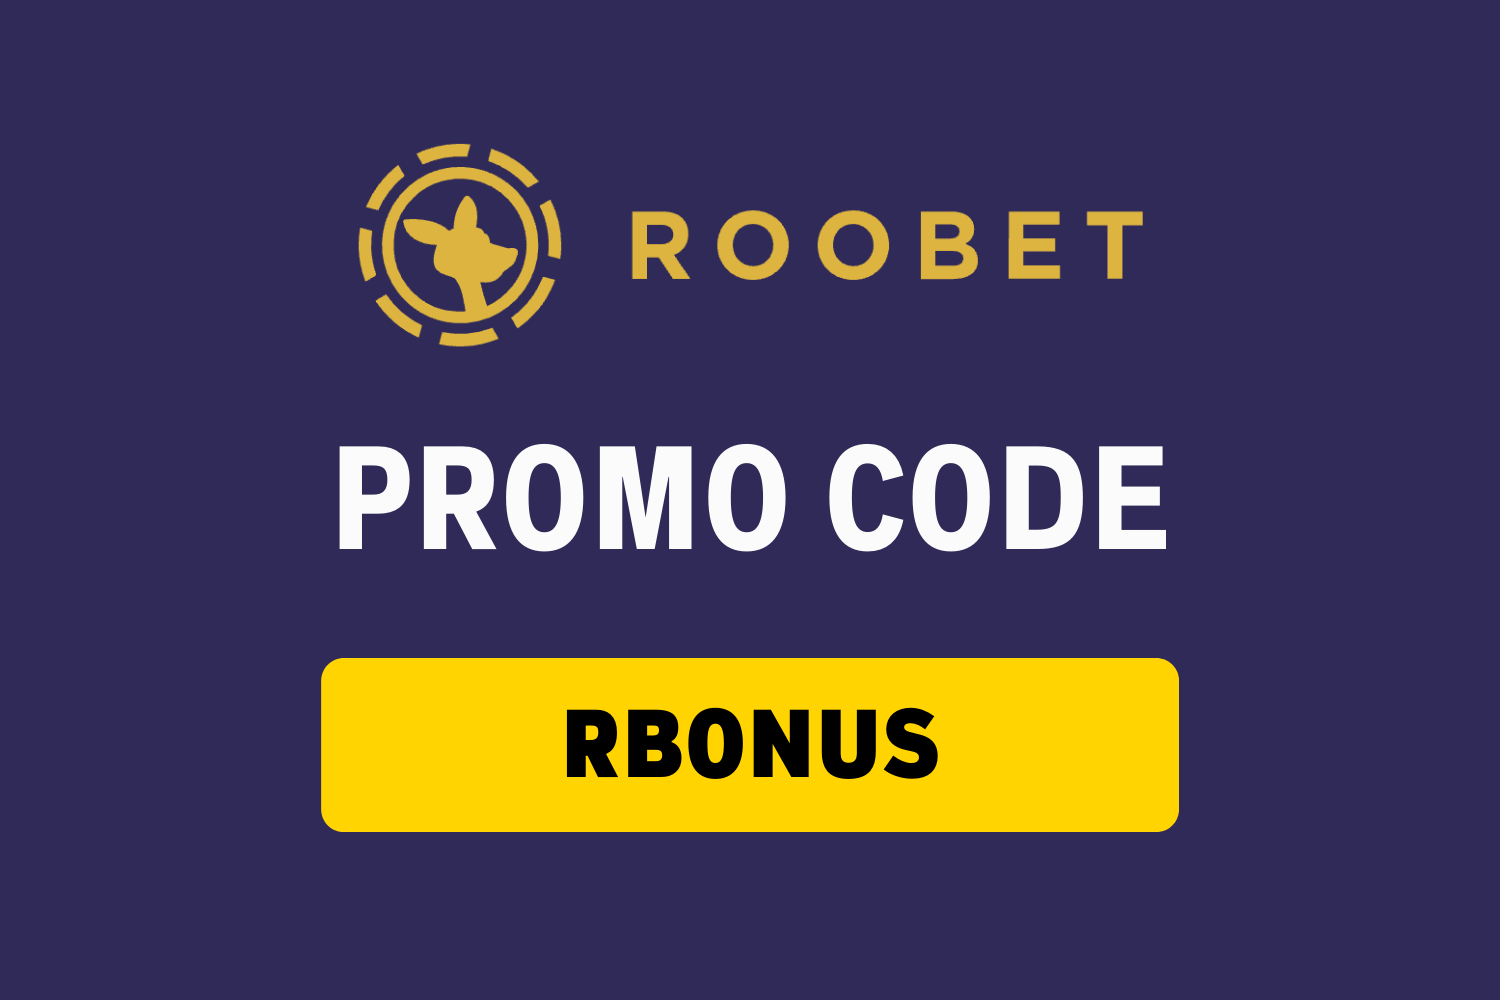 roobet com promo code